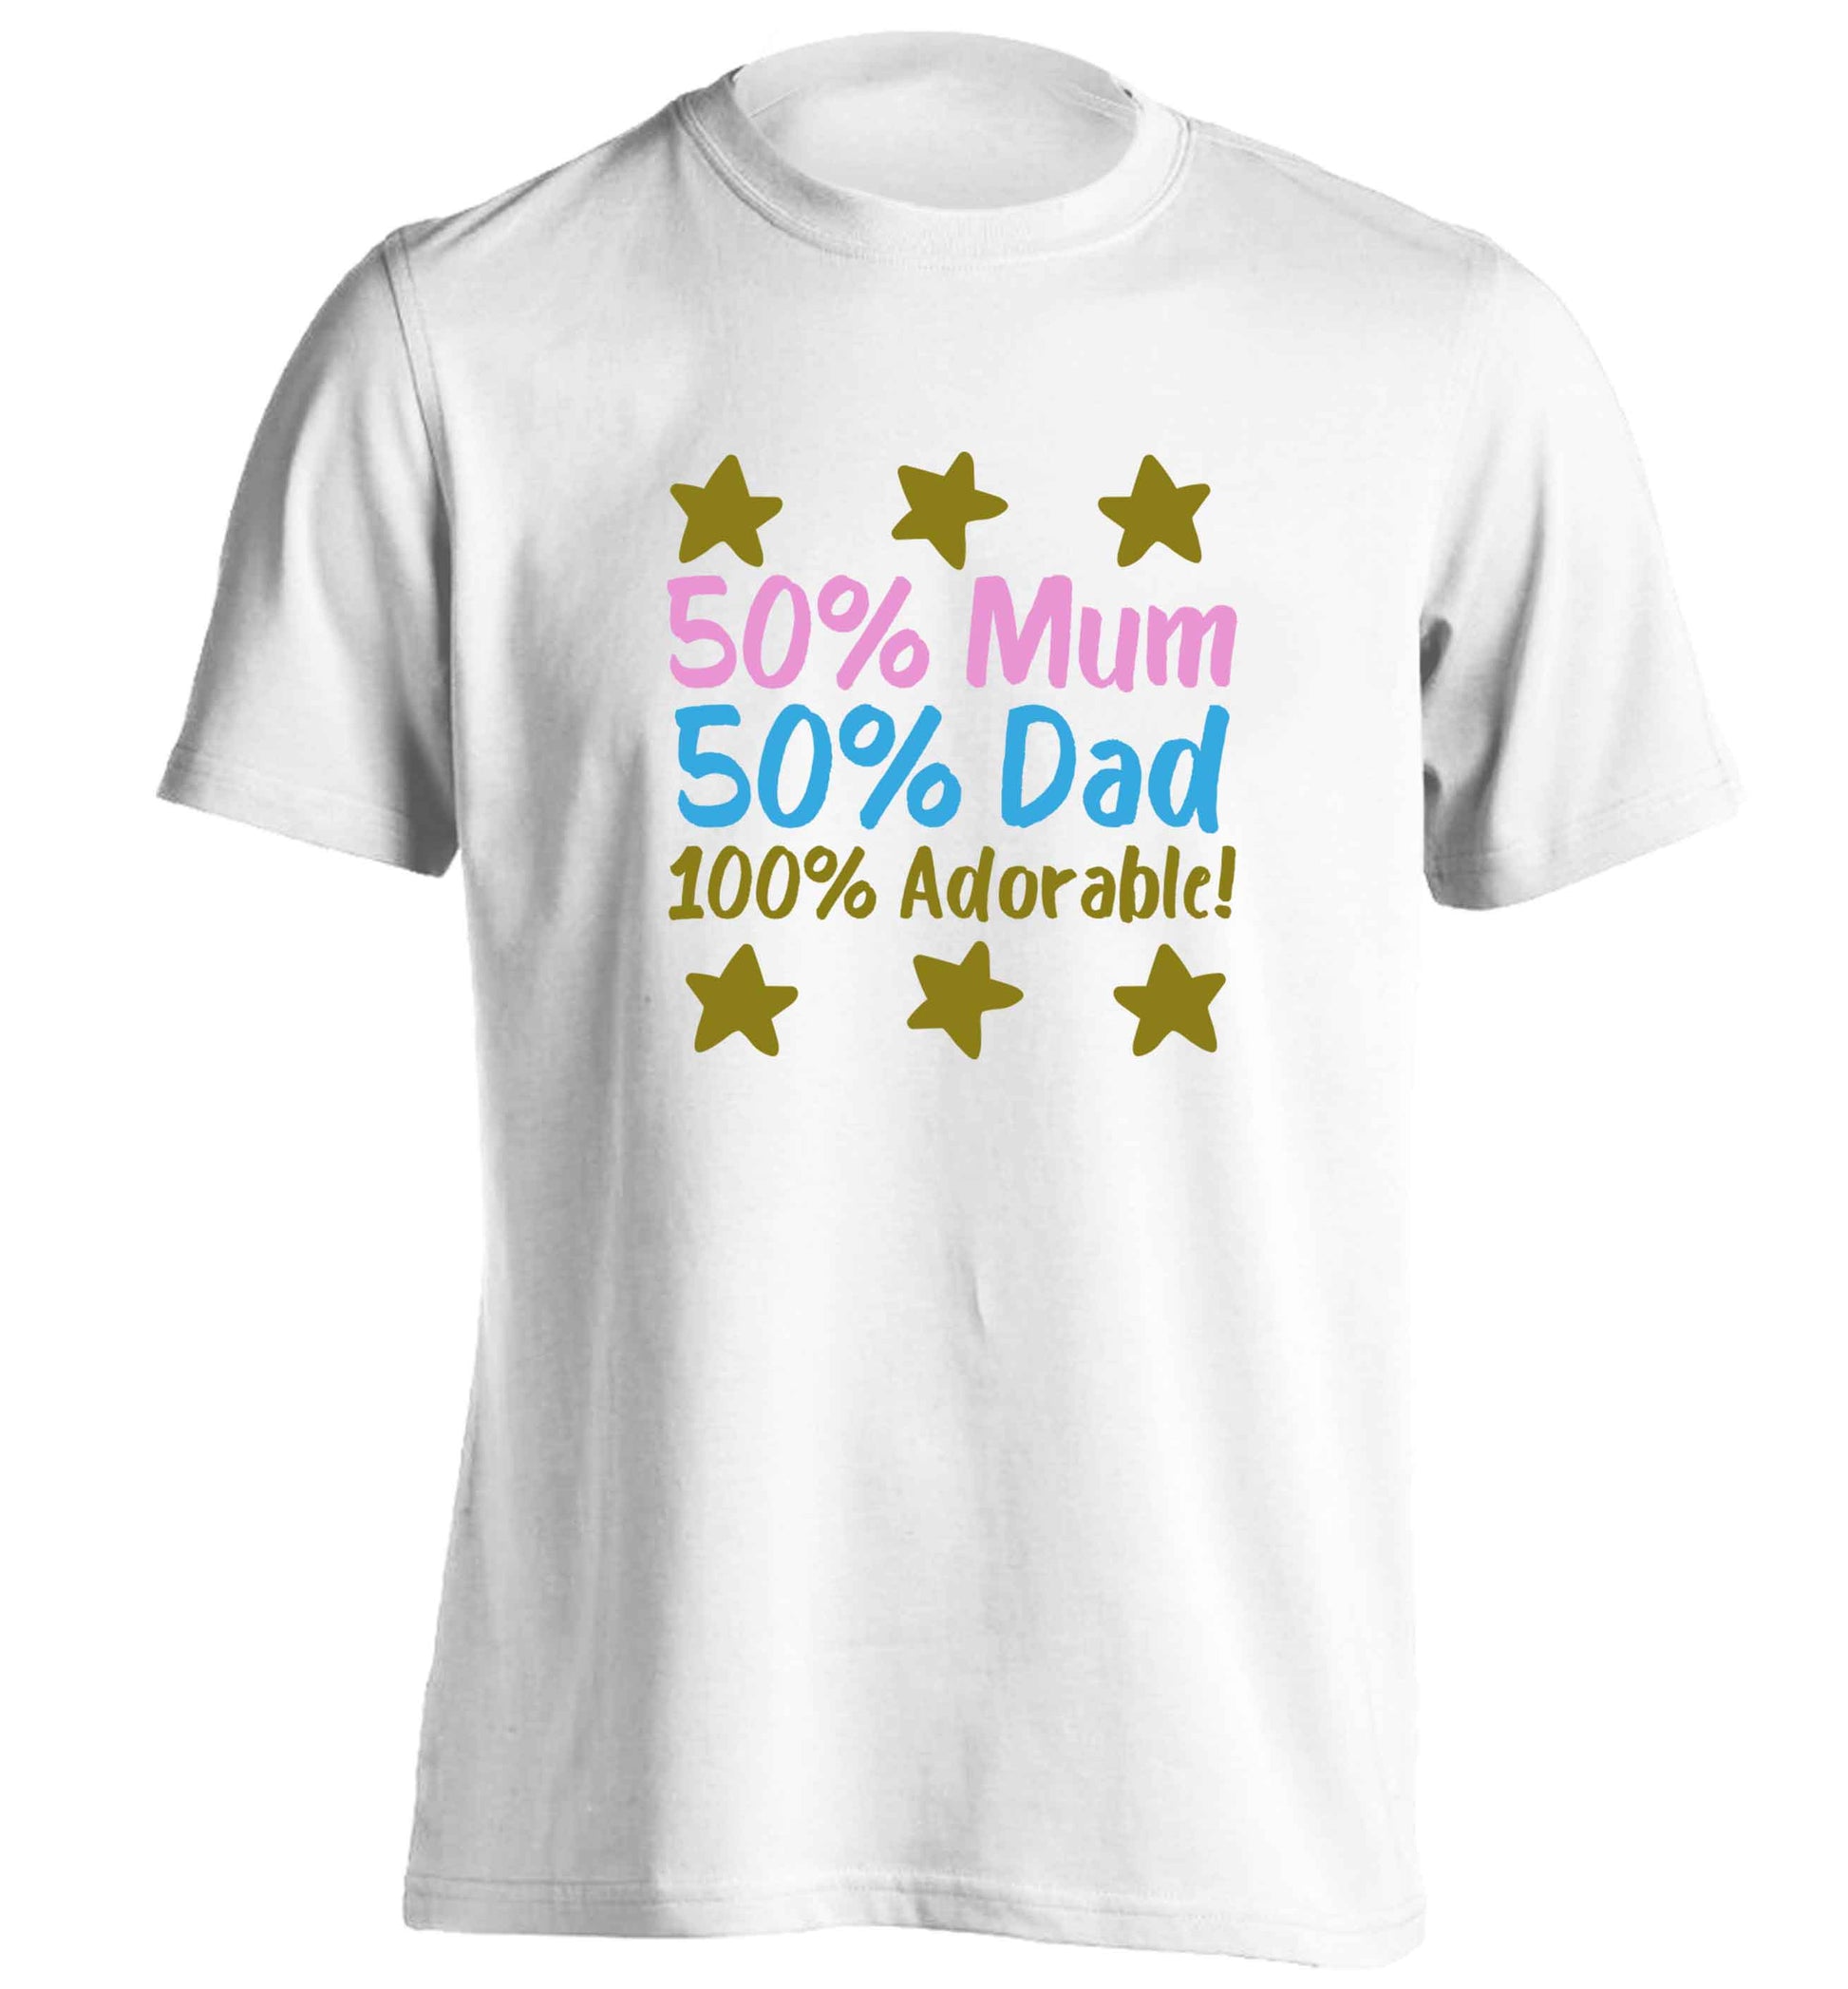 50% mum 50% dad 100% adorable adults unisex white Tshirt 2XL